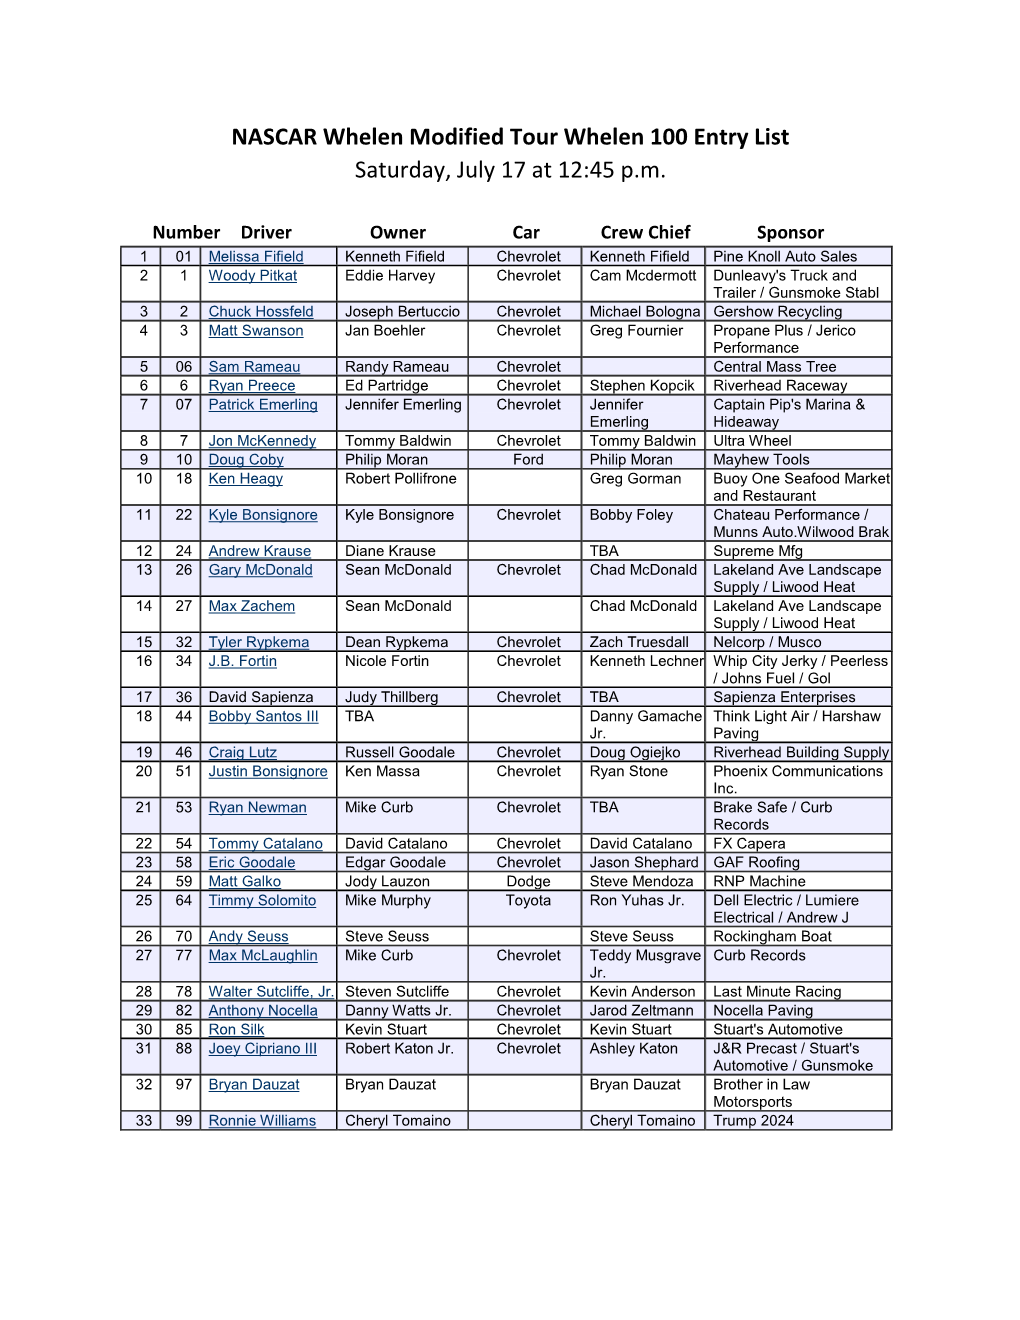 NASCAR Whelen Modified Tour Whelen 100 Entry List Saturday, July 17 at 12:45 P.M